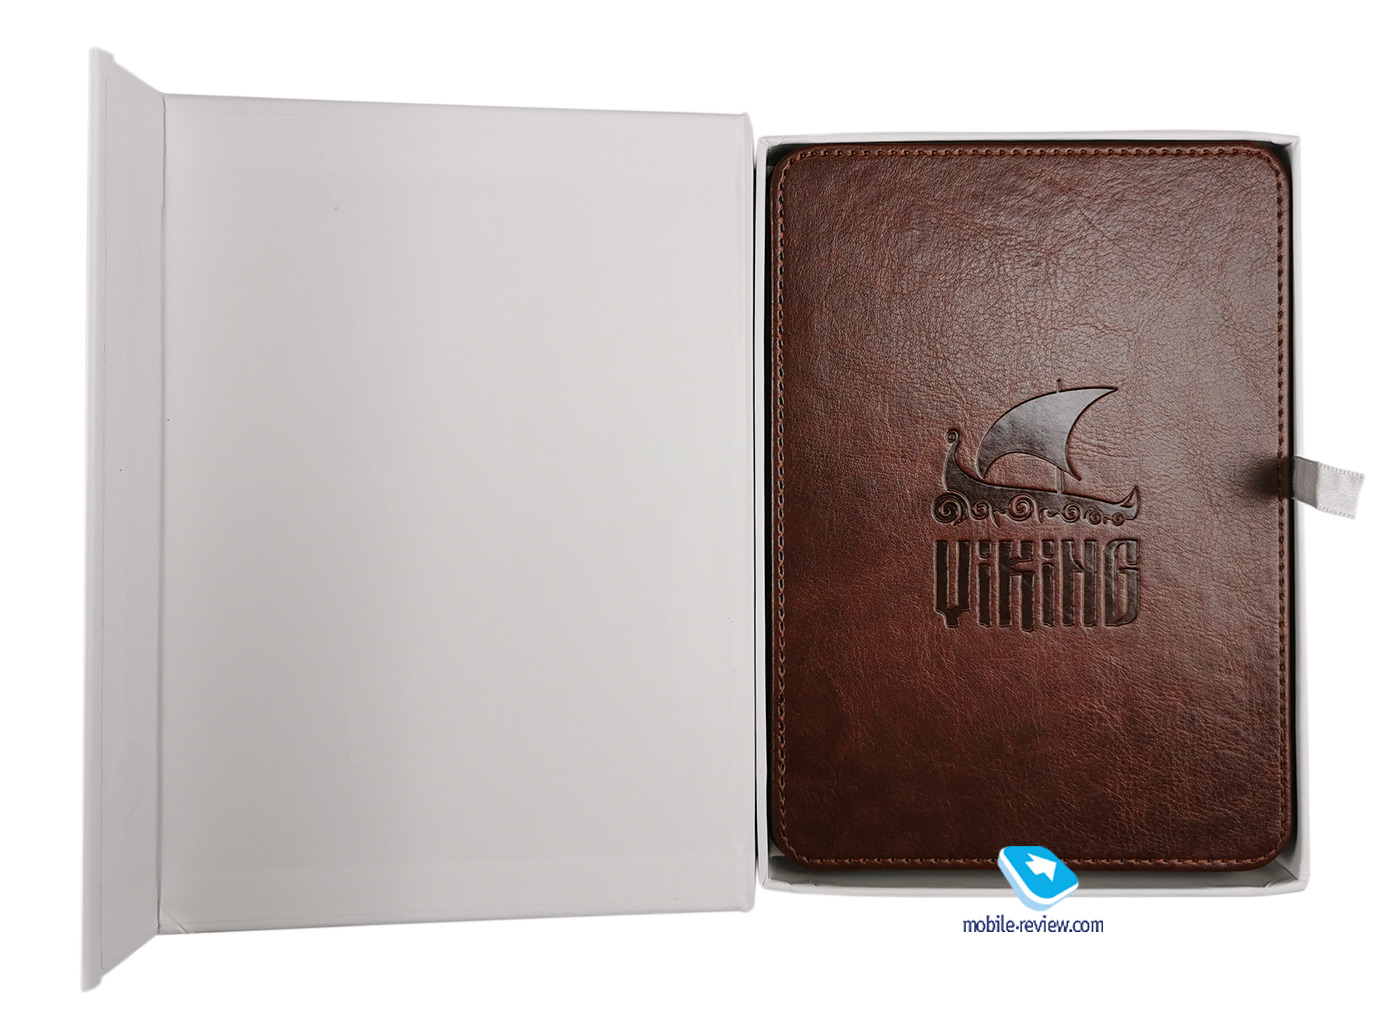 ONYX BOOX Viking e-book review